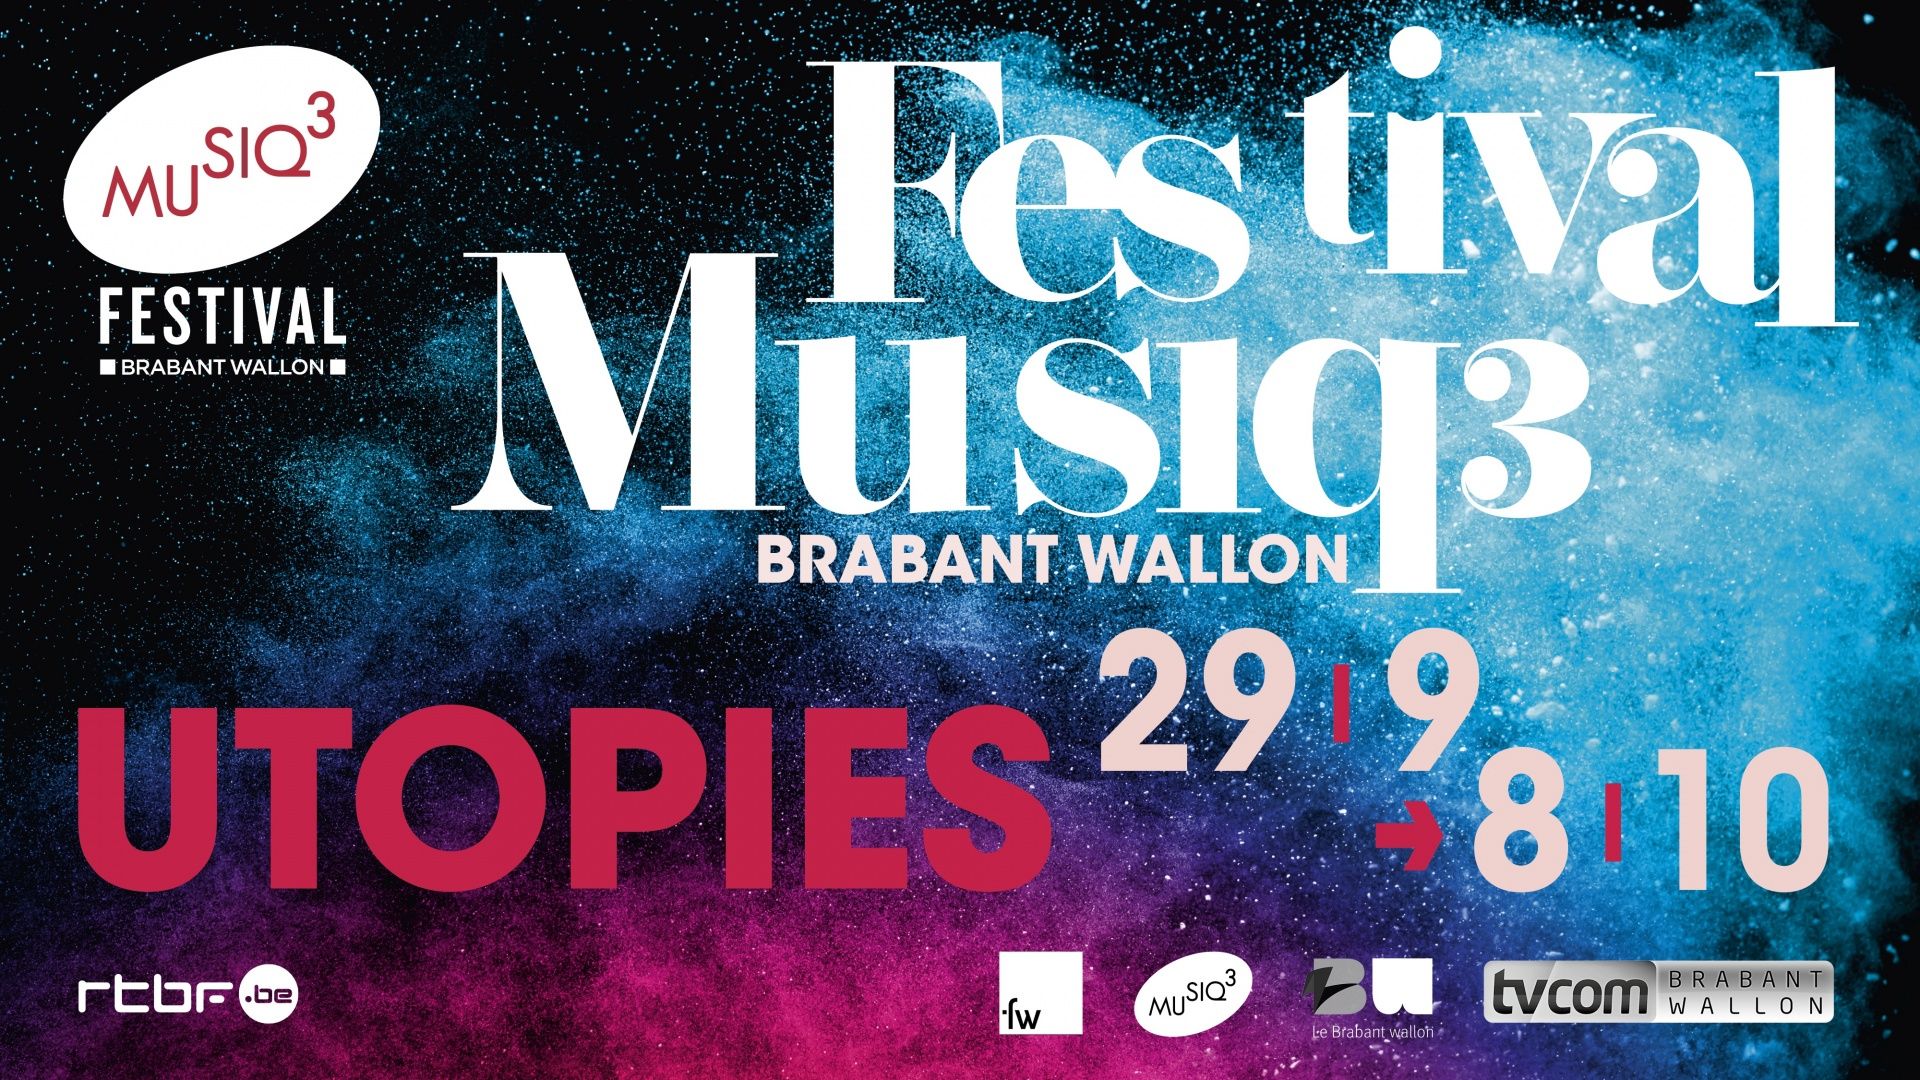 Le journal du Festival Musiq3 Brabant wallon